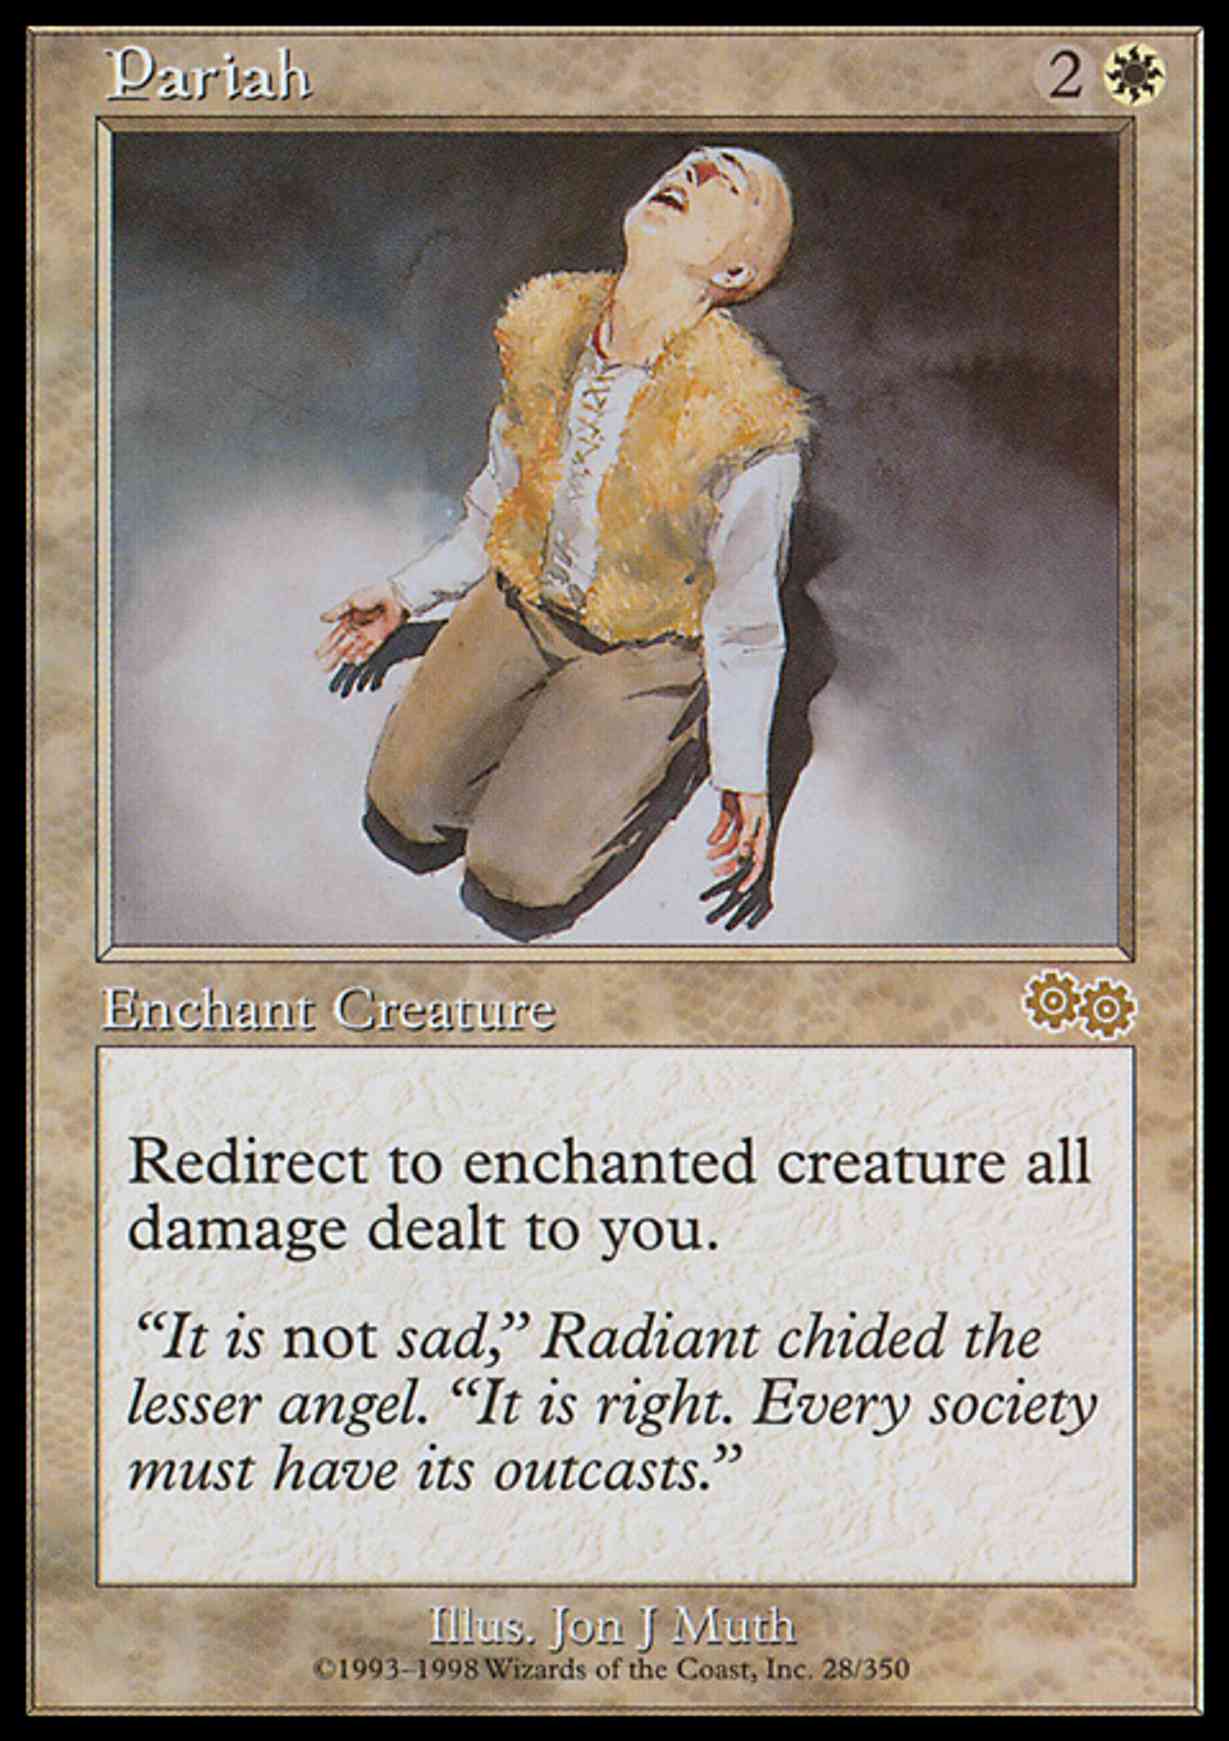 Pariah magic card front